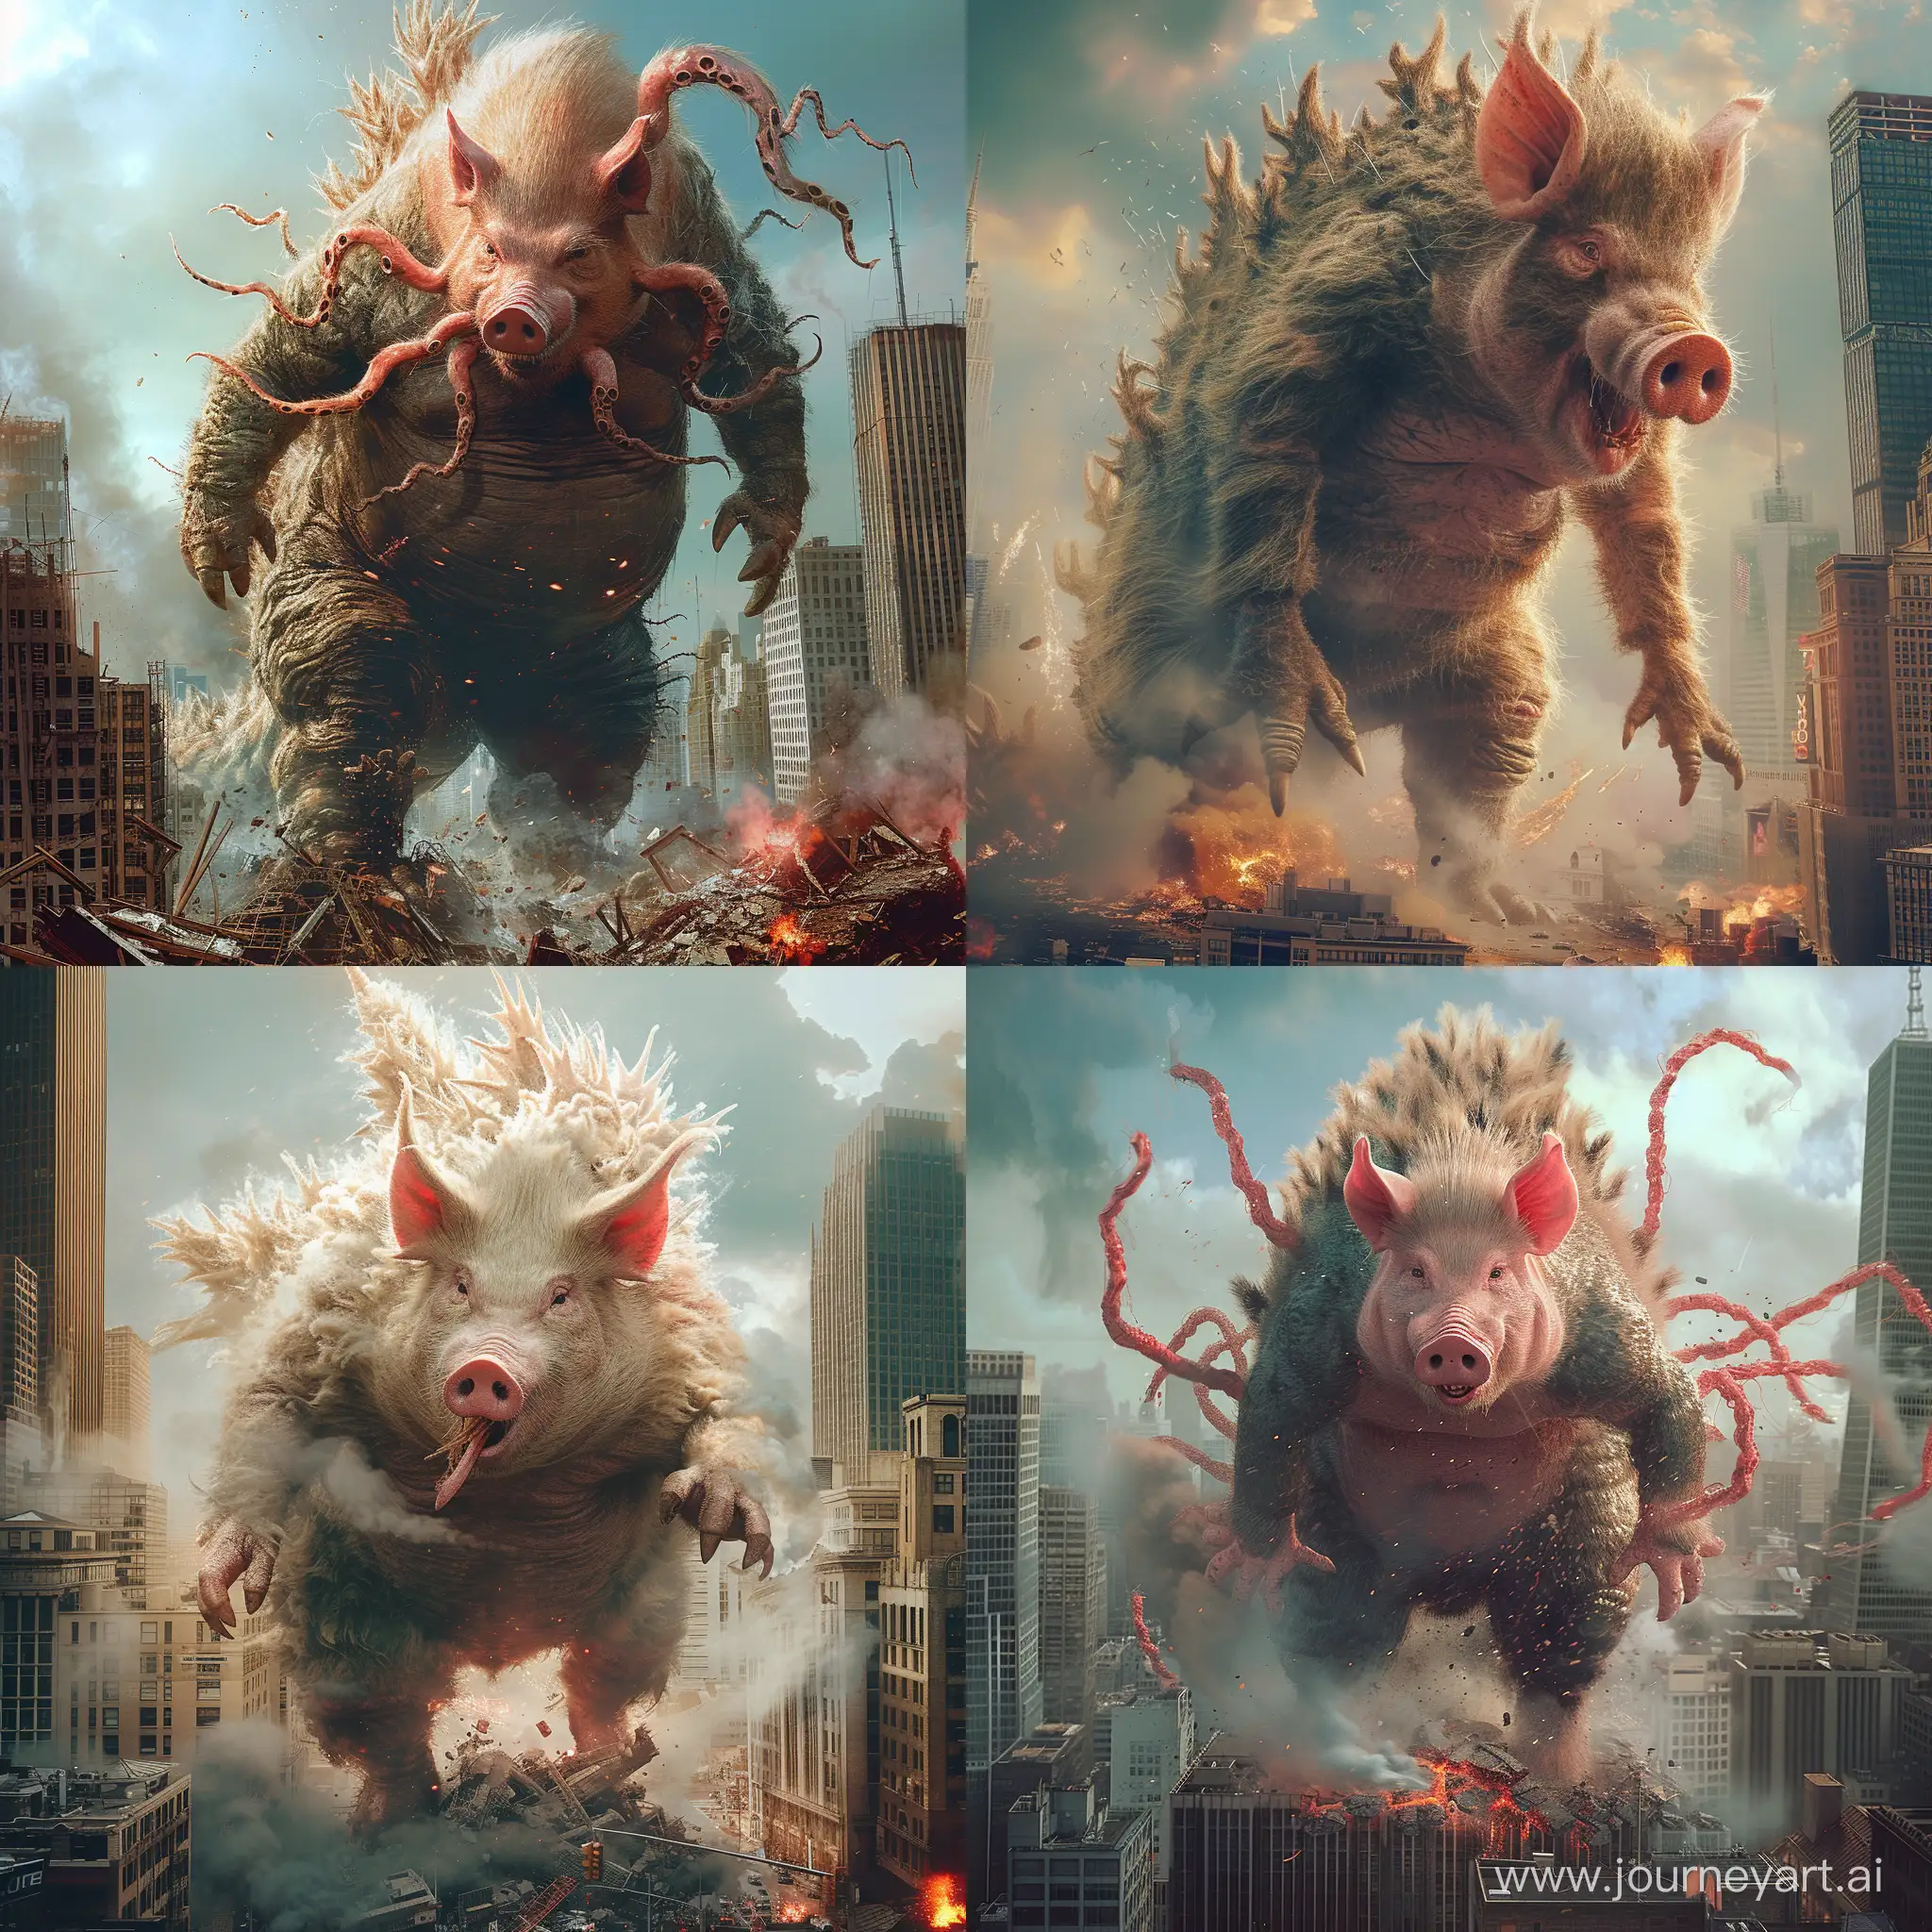 Gigantic-Pigzilla-Rampages-Through-City-Epic-Fantasy-Destruction-Art